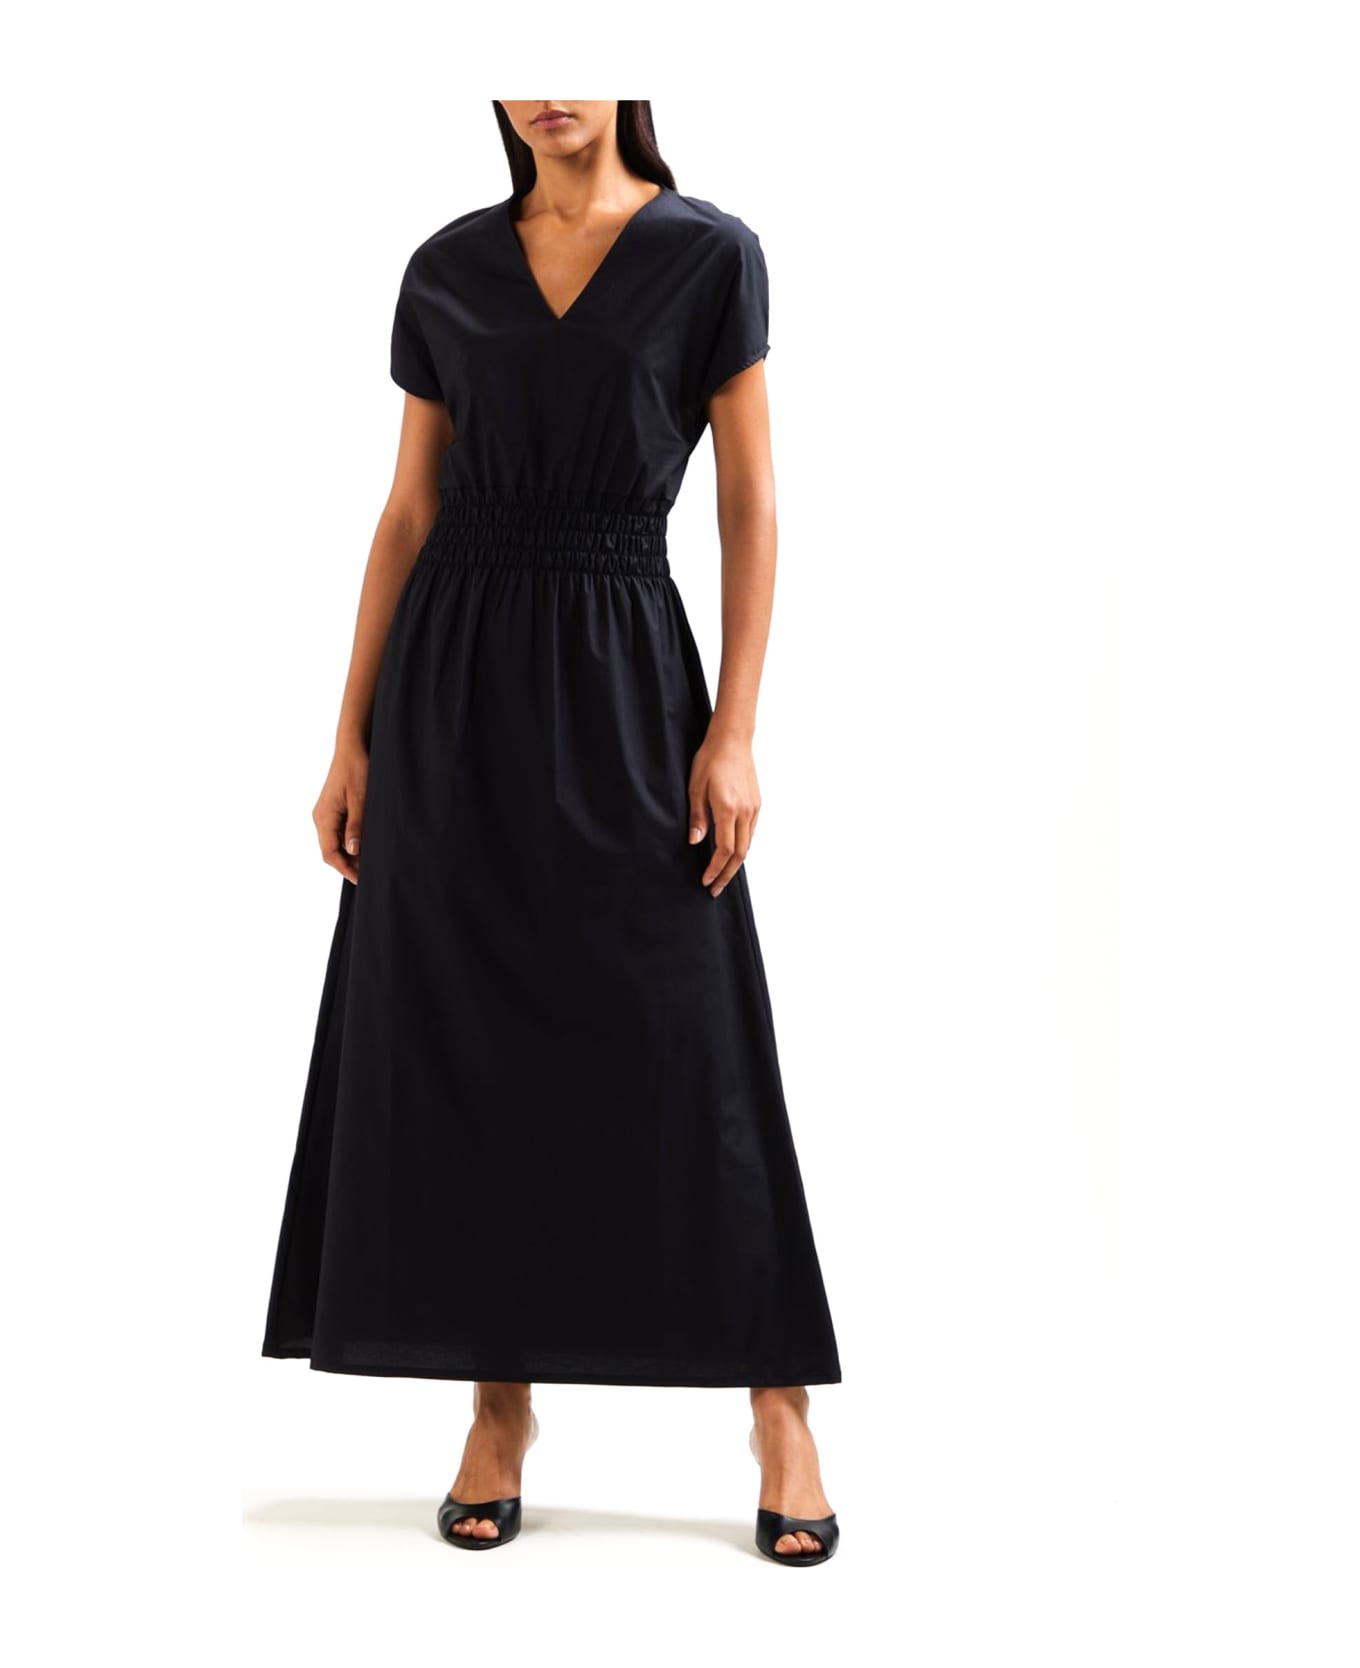 Kangra Black Stretch Cotton Long Dress - Black